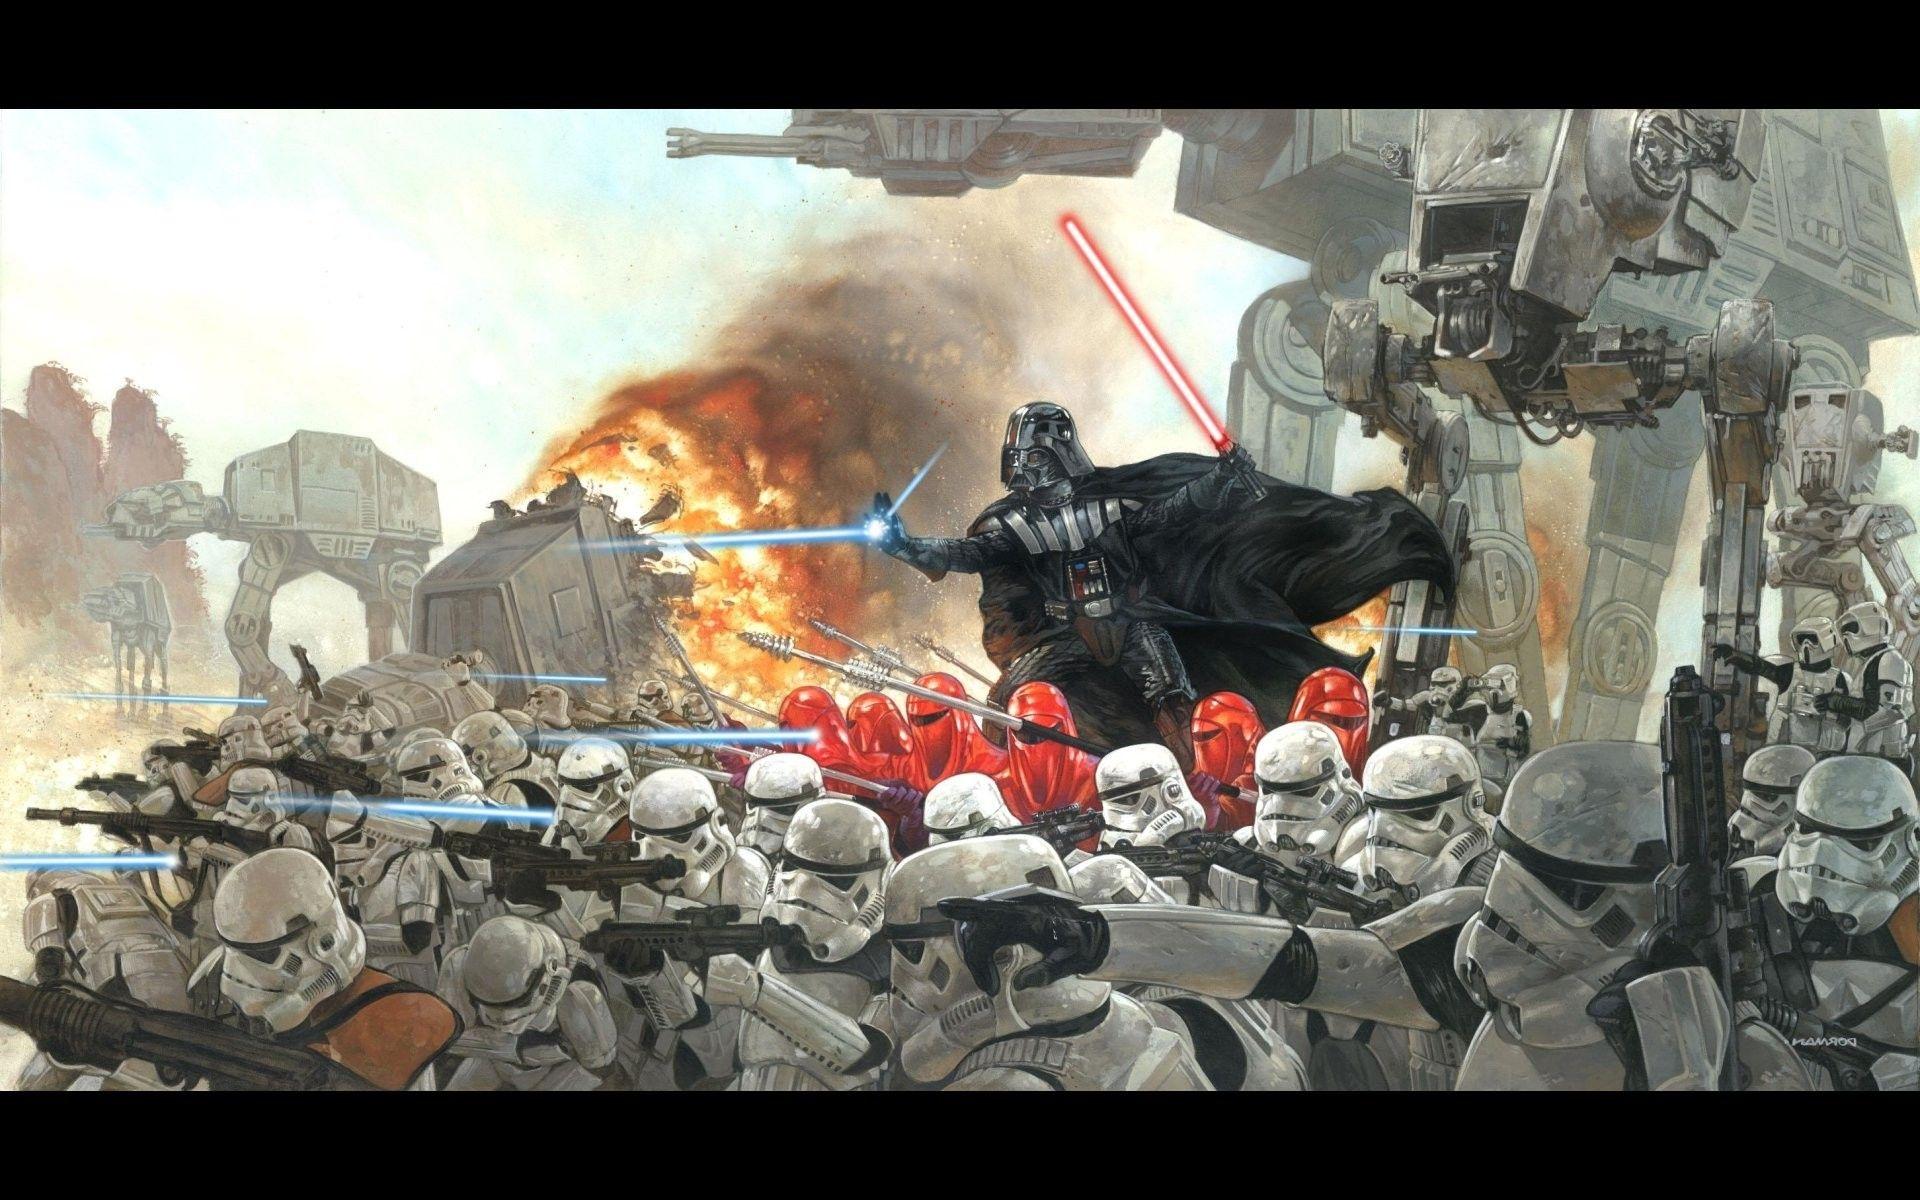 Star Wars battle wallpaper. Star wars wallpaper, Star wars